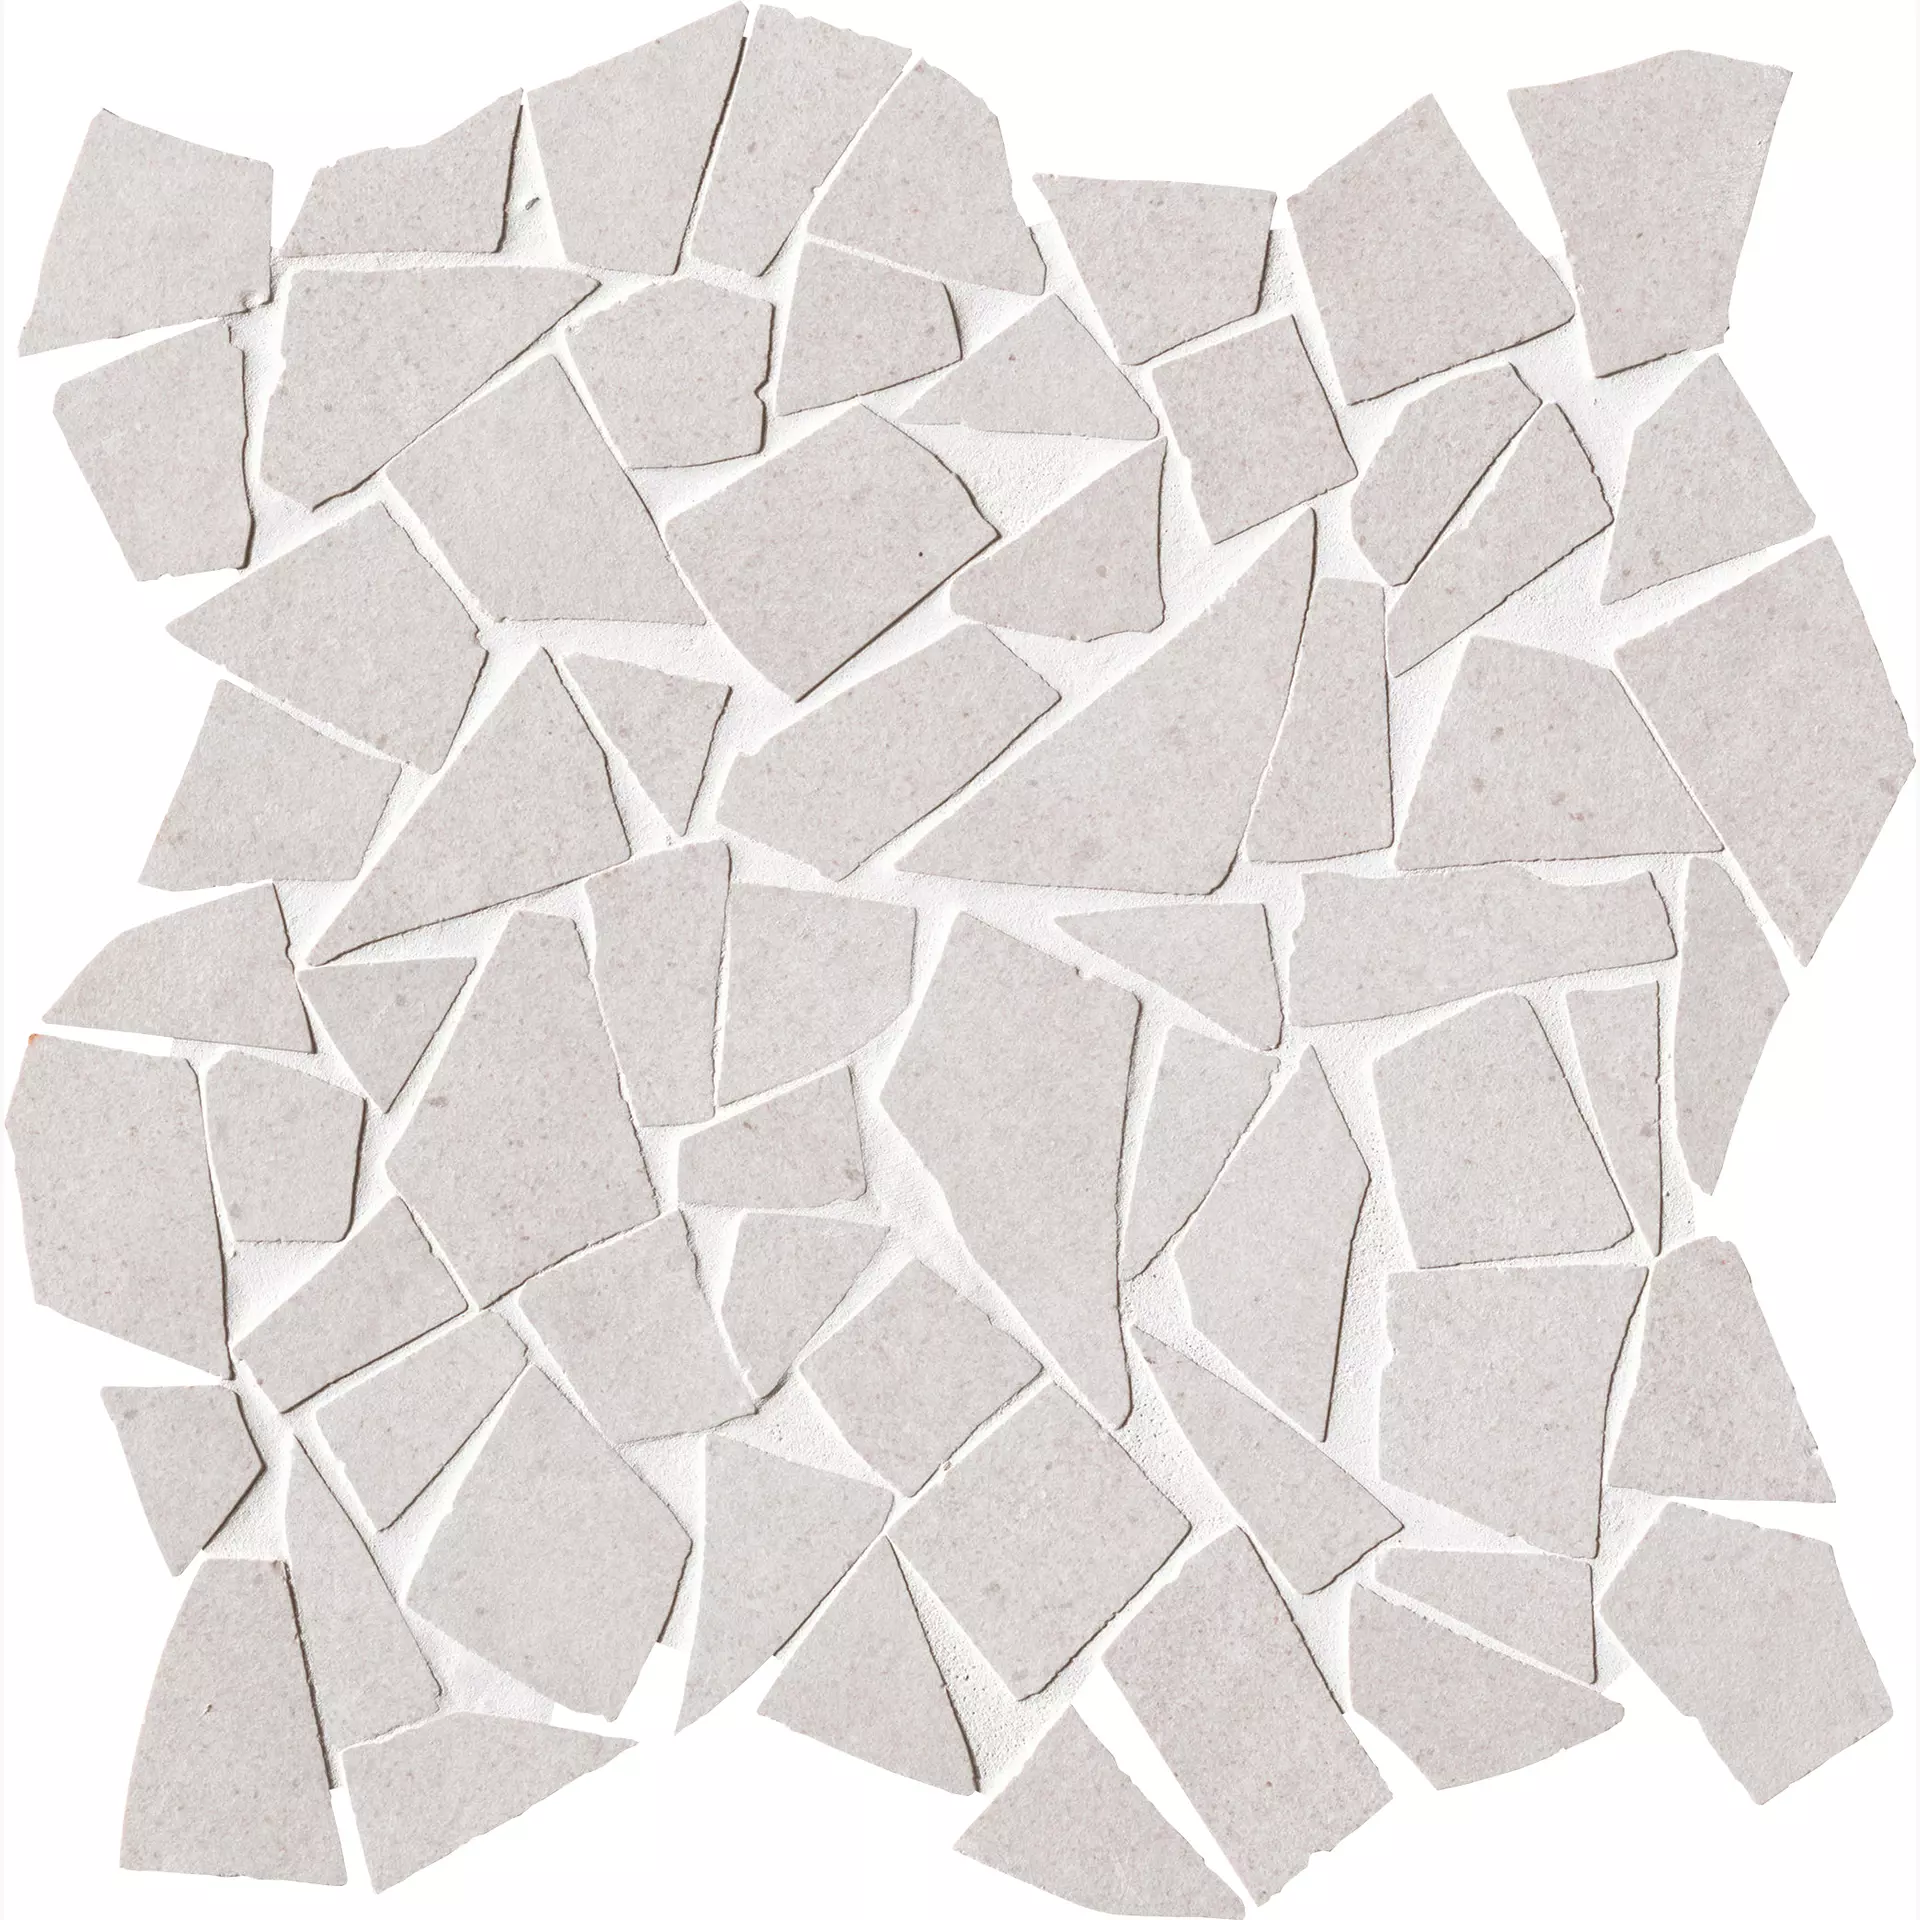 FAP Nux White Anticato Mosaic Schegge fOQP 30x30cm